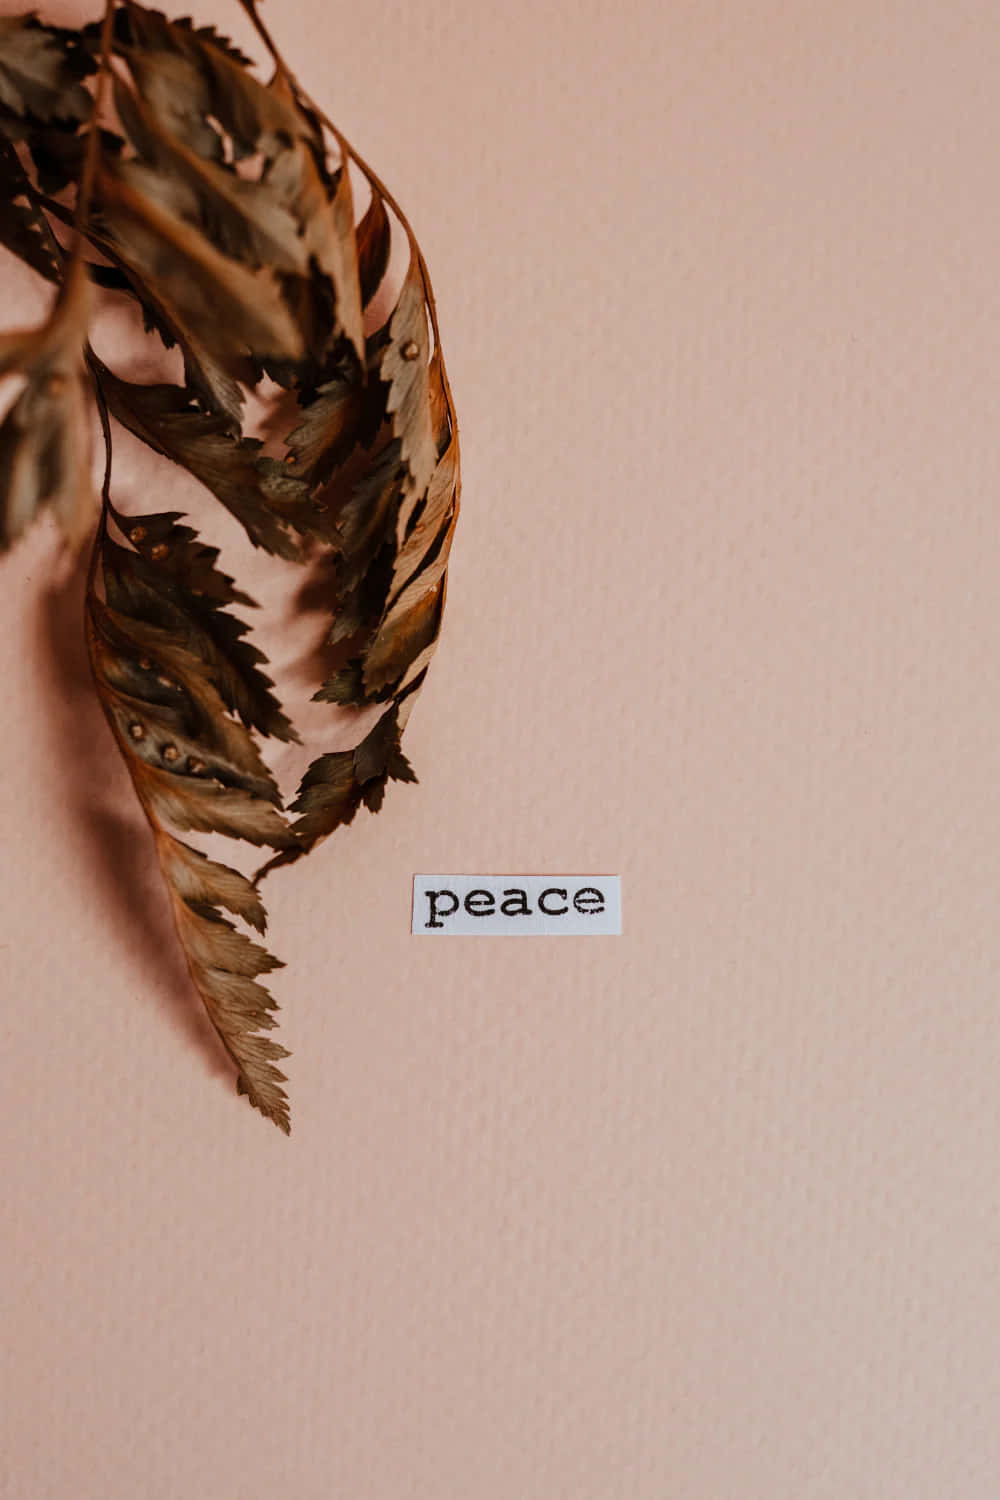 Peaceful Featherand Word Aesthetic Wallpaper